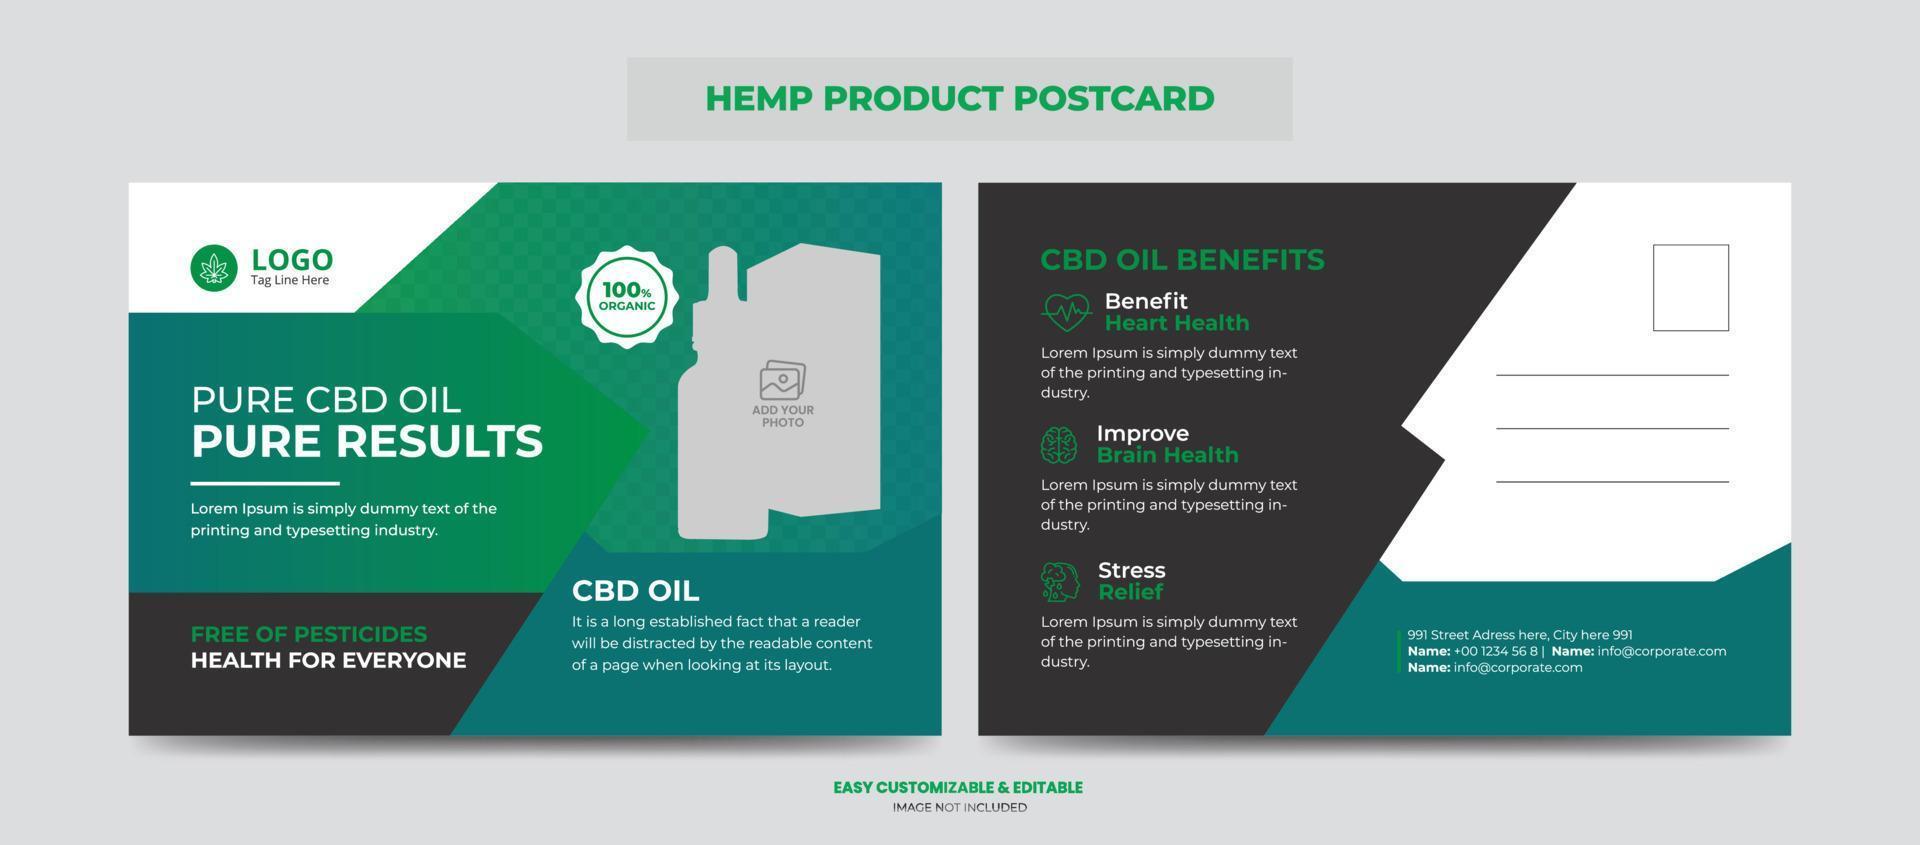 hennep of cbd product ansichtkaart. cannabis sativa product verkoop of promotie briefkaart ontwerpsjabloon vector